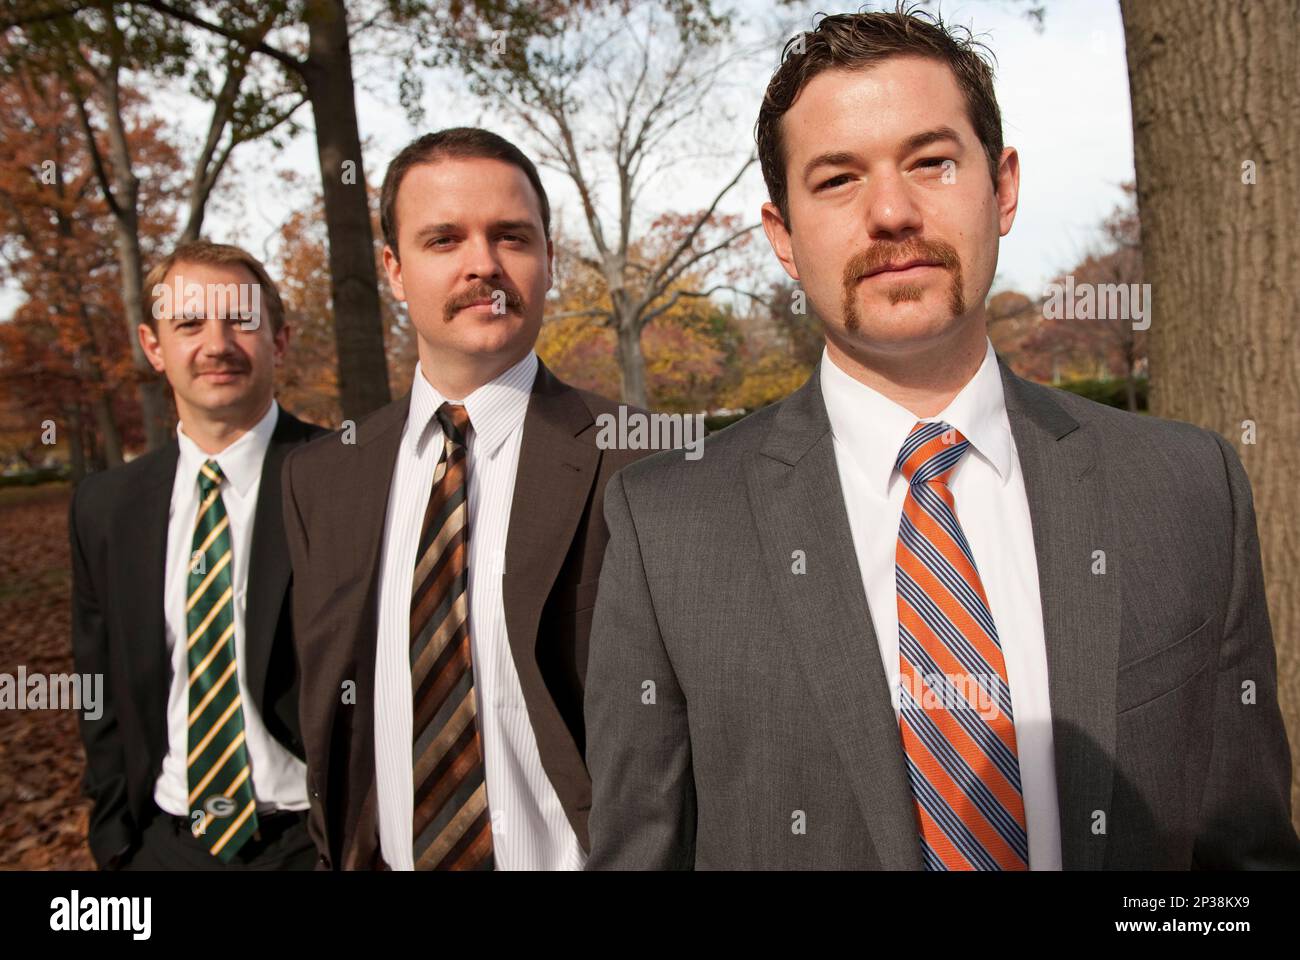 Auston Matthews is raising funds for men's health this Movember - Movember